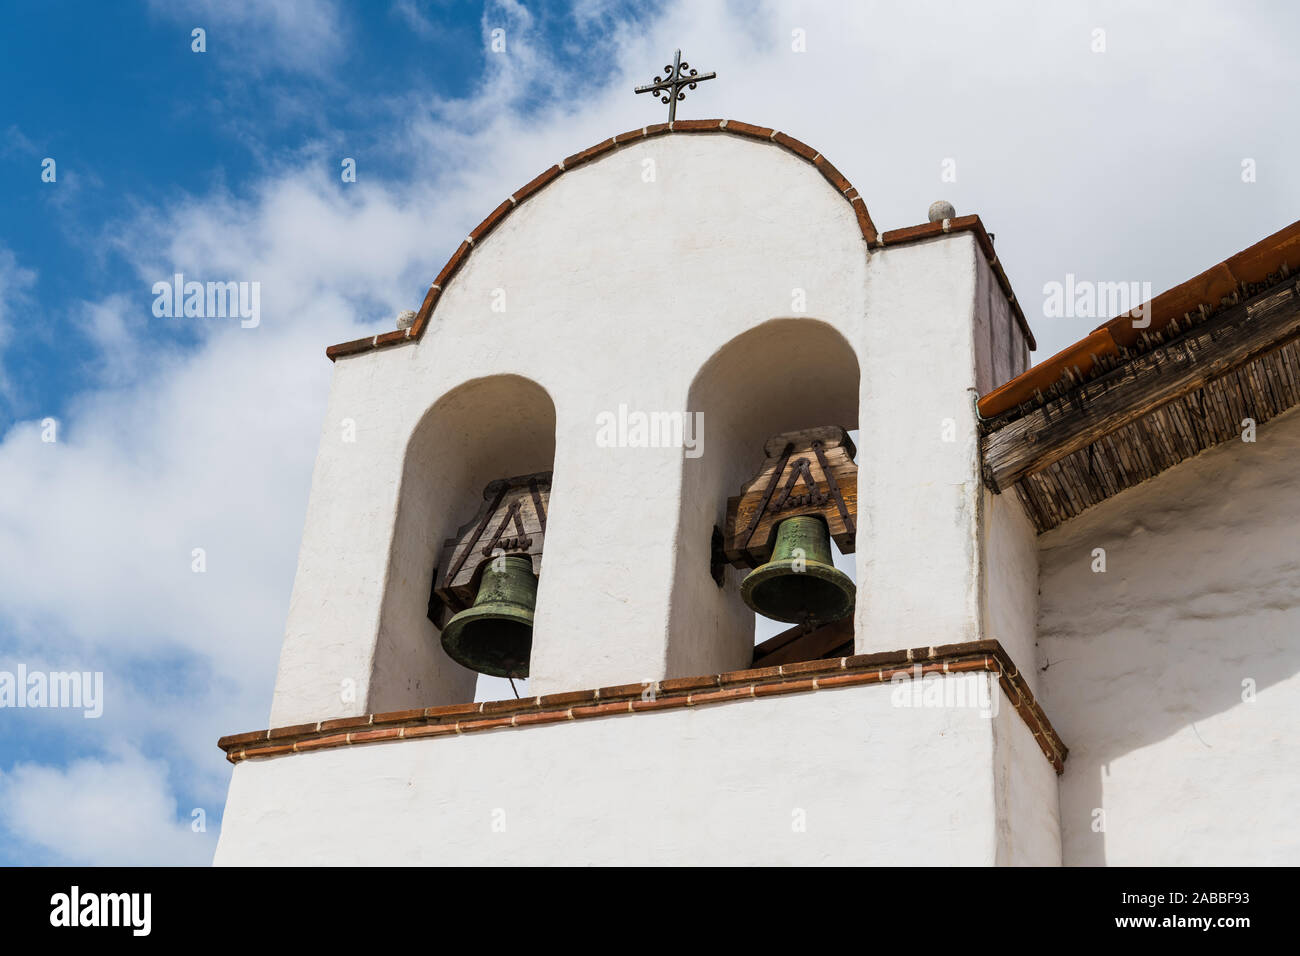 Historic white Spanish mission style church bell tower in El Presidio de Santa Barbara State Historic Park, Santa Barbara, California, USA Stock Photo